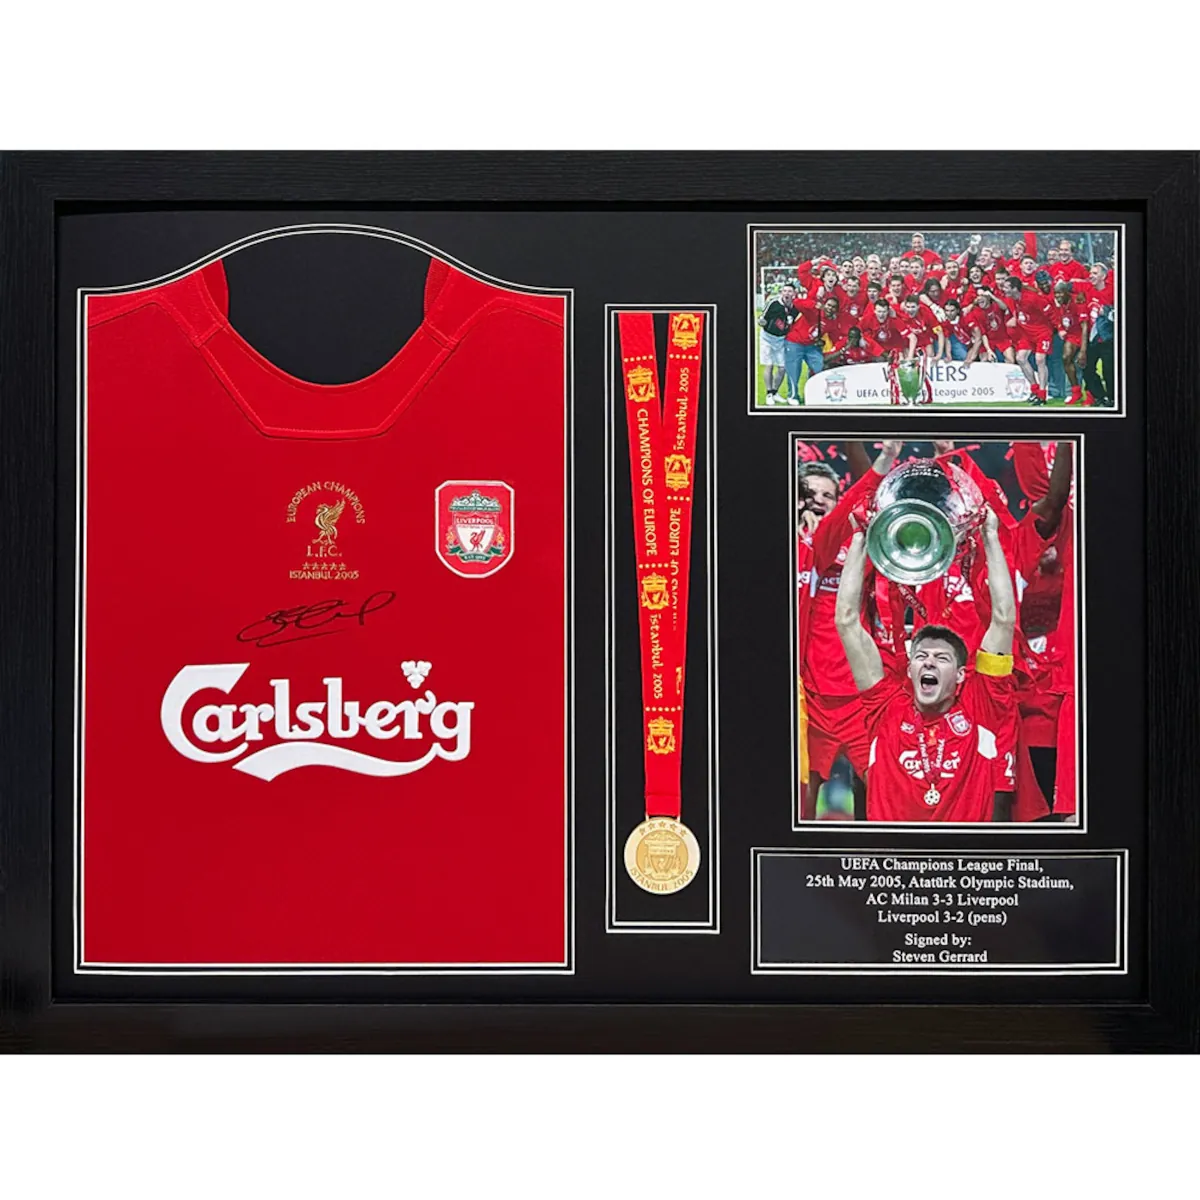 TM-03200 Liverpool F.C. Steven Gerrard Framed Signed 2005 Replica Football Shirt & Medal